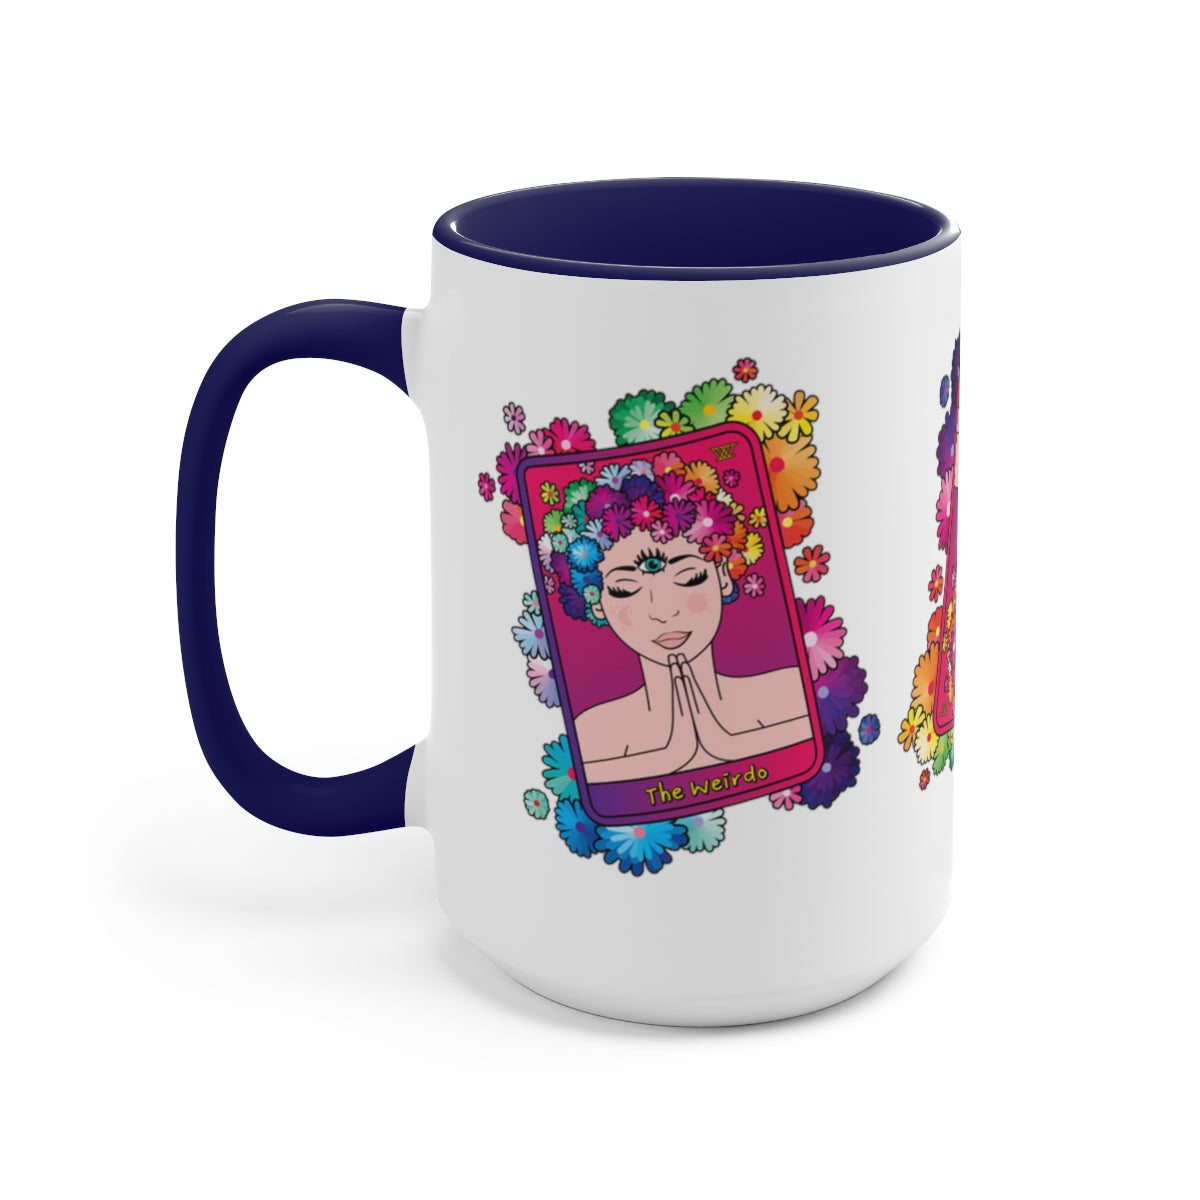 WEIRDO | This mug is for you weirdos who like coffee or tea, are into spirituality and tarot cards. 